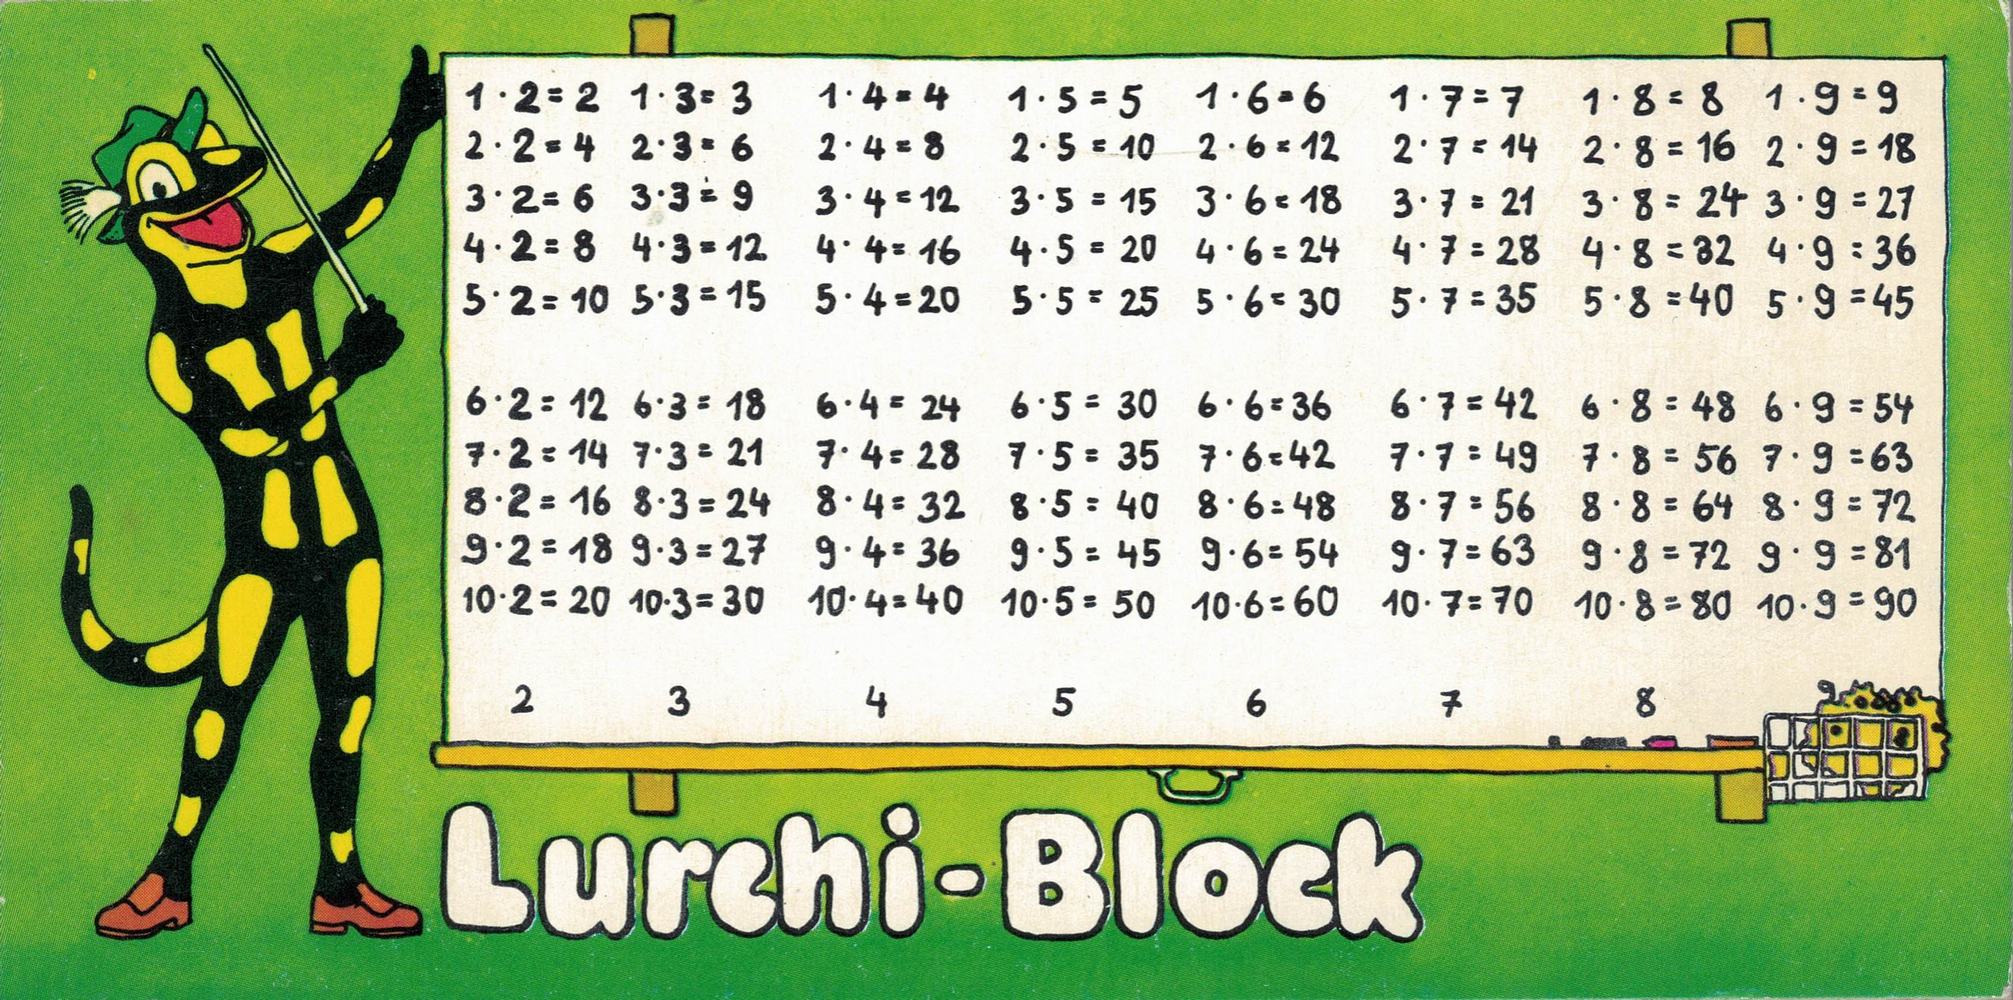 Lurchis Block